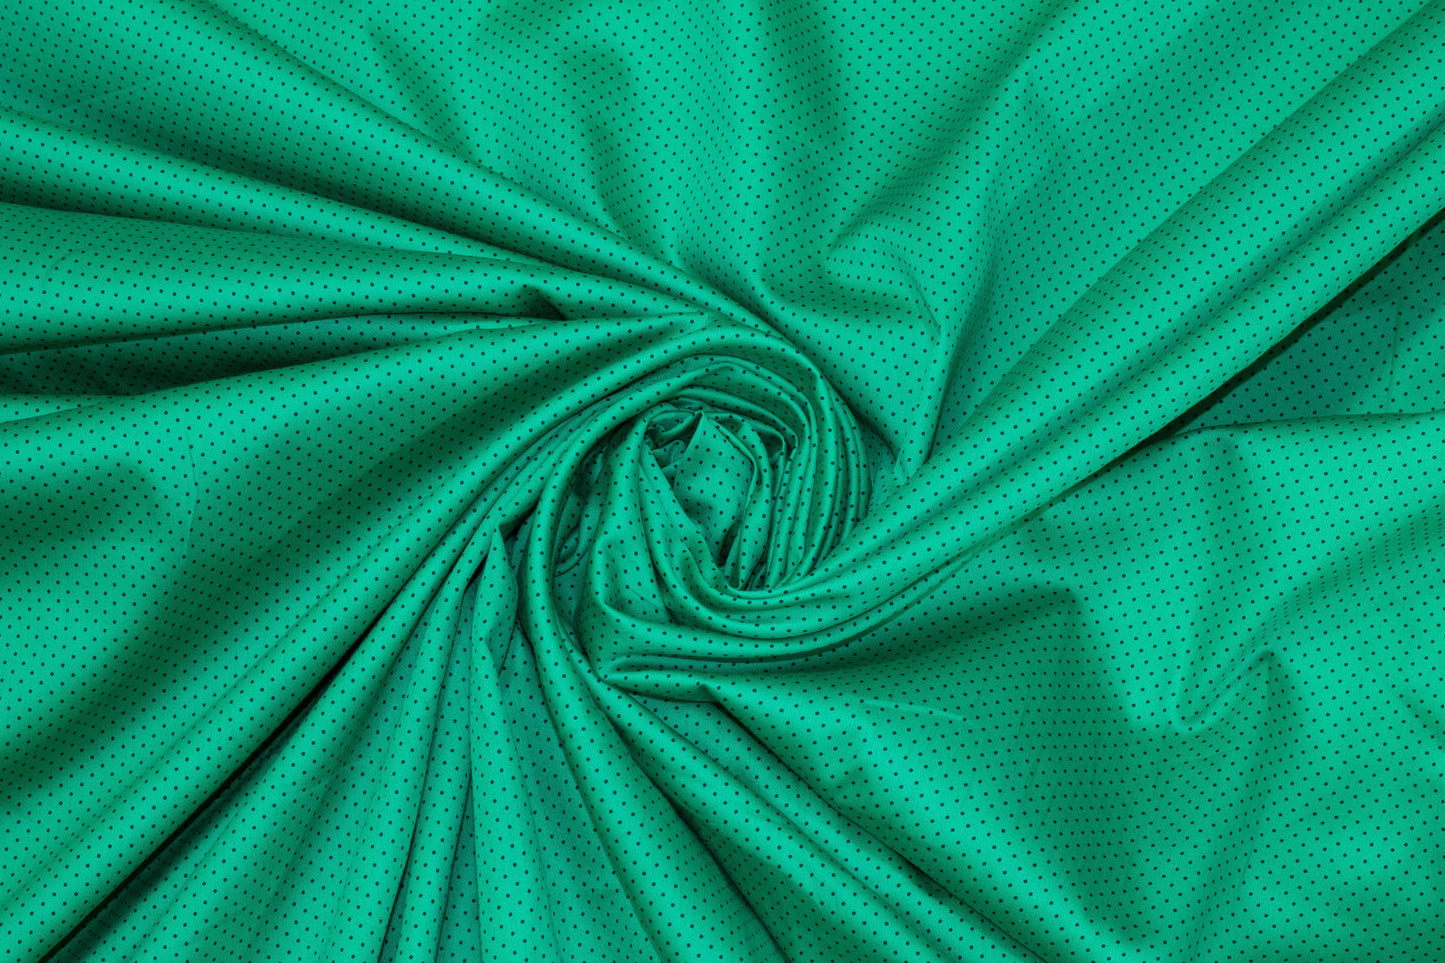 Green and Black Polka Dot Cotton - Prime Fabrics